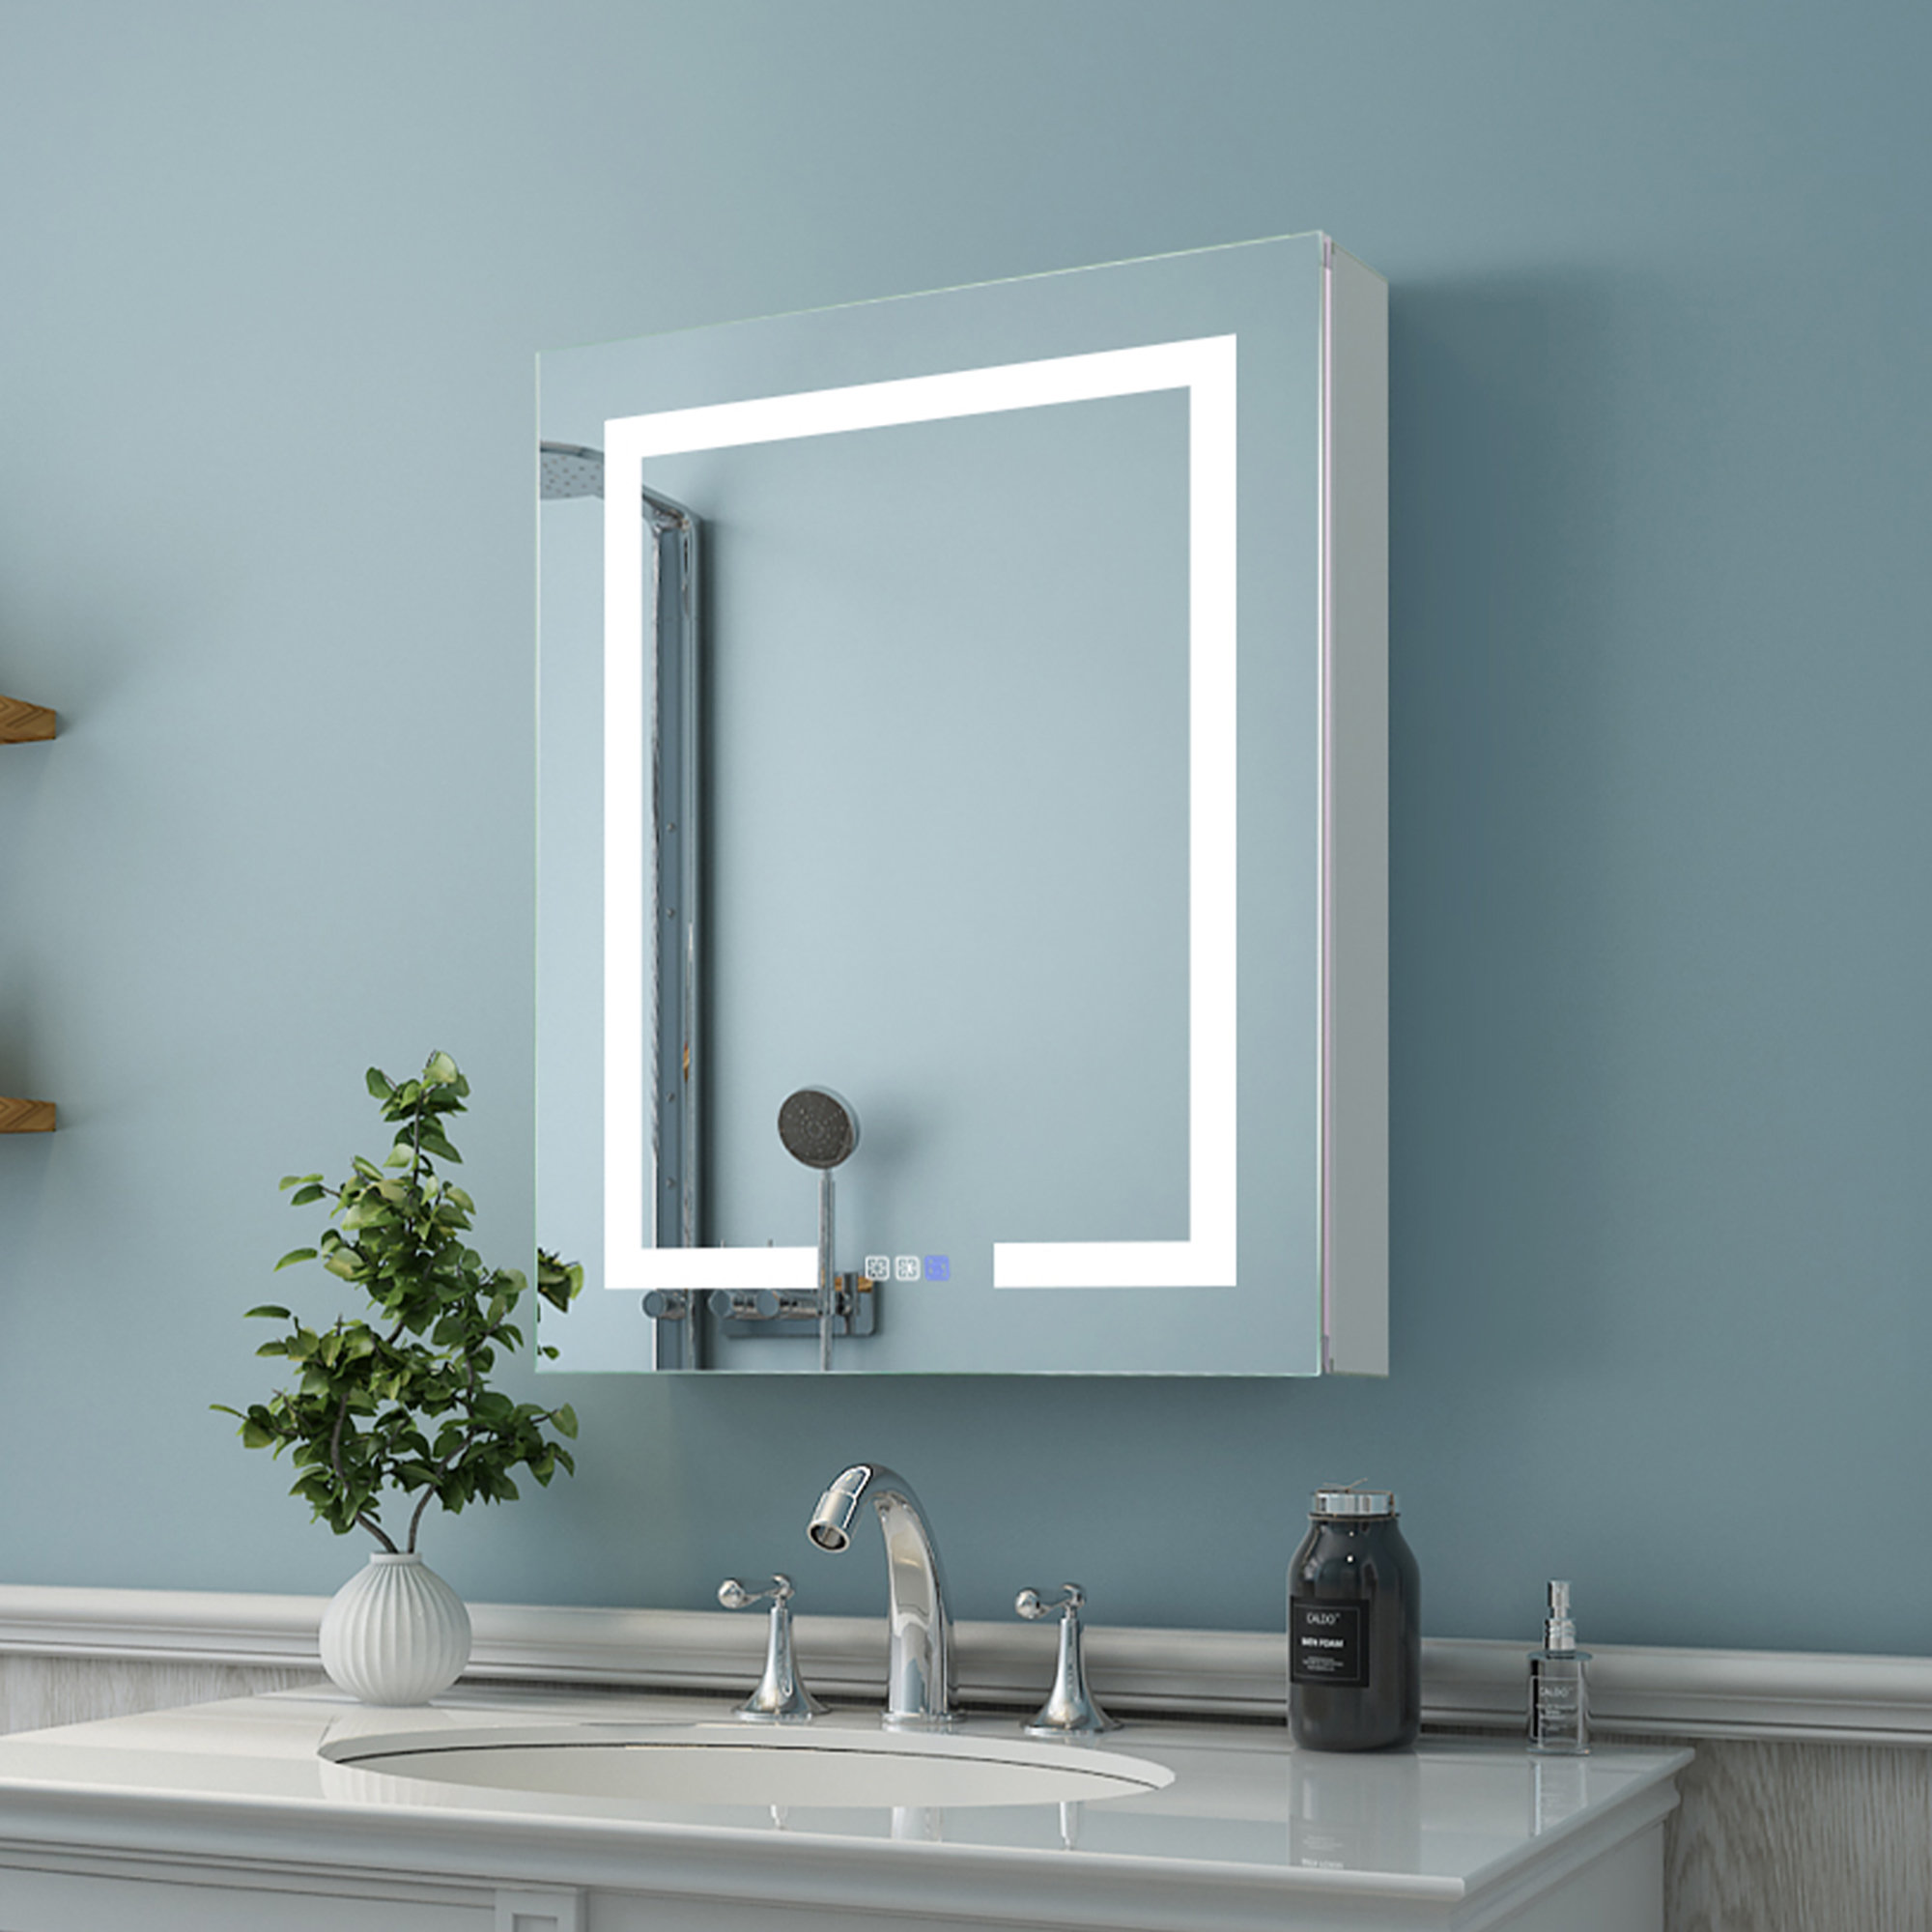 ExBrite 24 W x 30 H Light Medicine Cabinet Recessed or Surface Mount Framed Aluminum Adjustable Shelves Vanity Mirror Cabinet